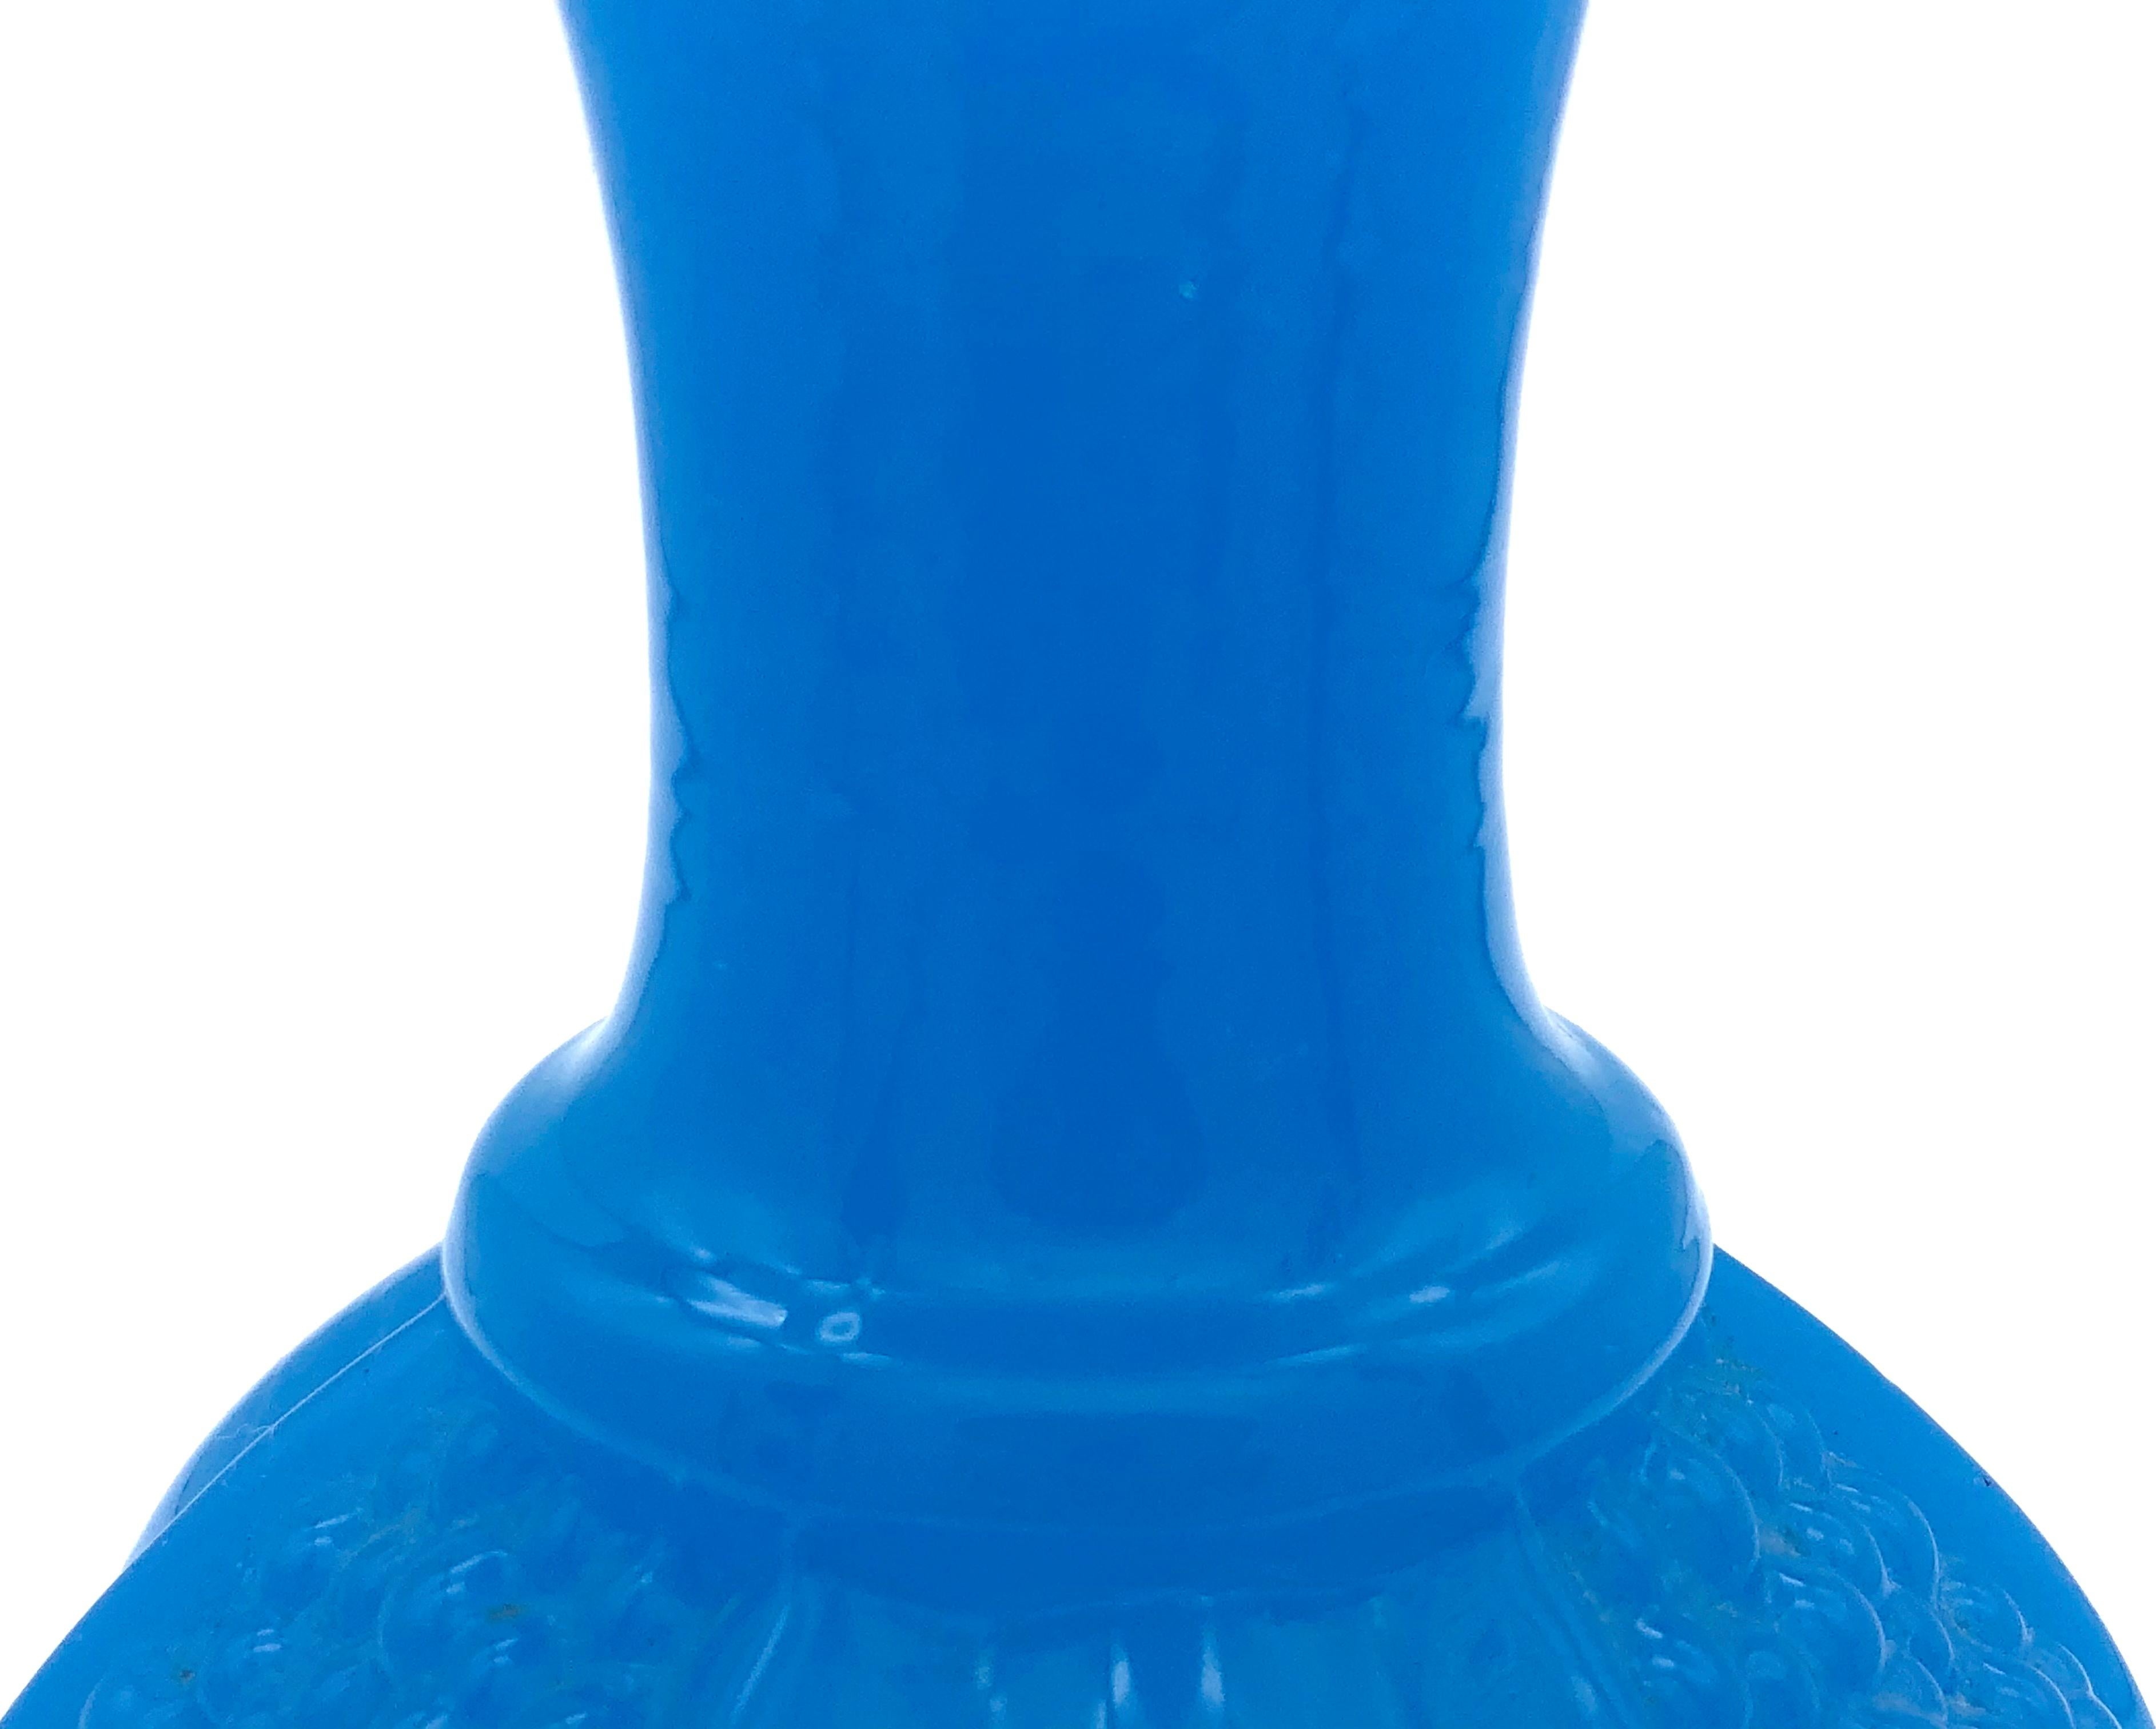 Molded Antique Baccarat Glass Vase Opaque Blue, 1870, France